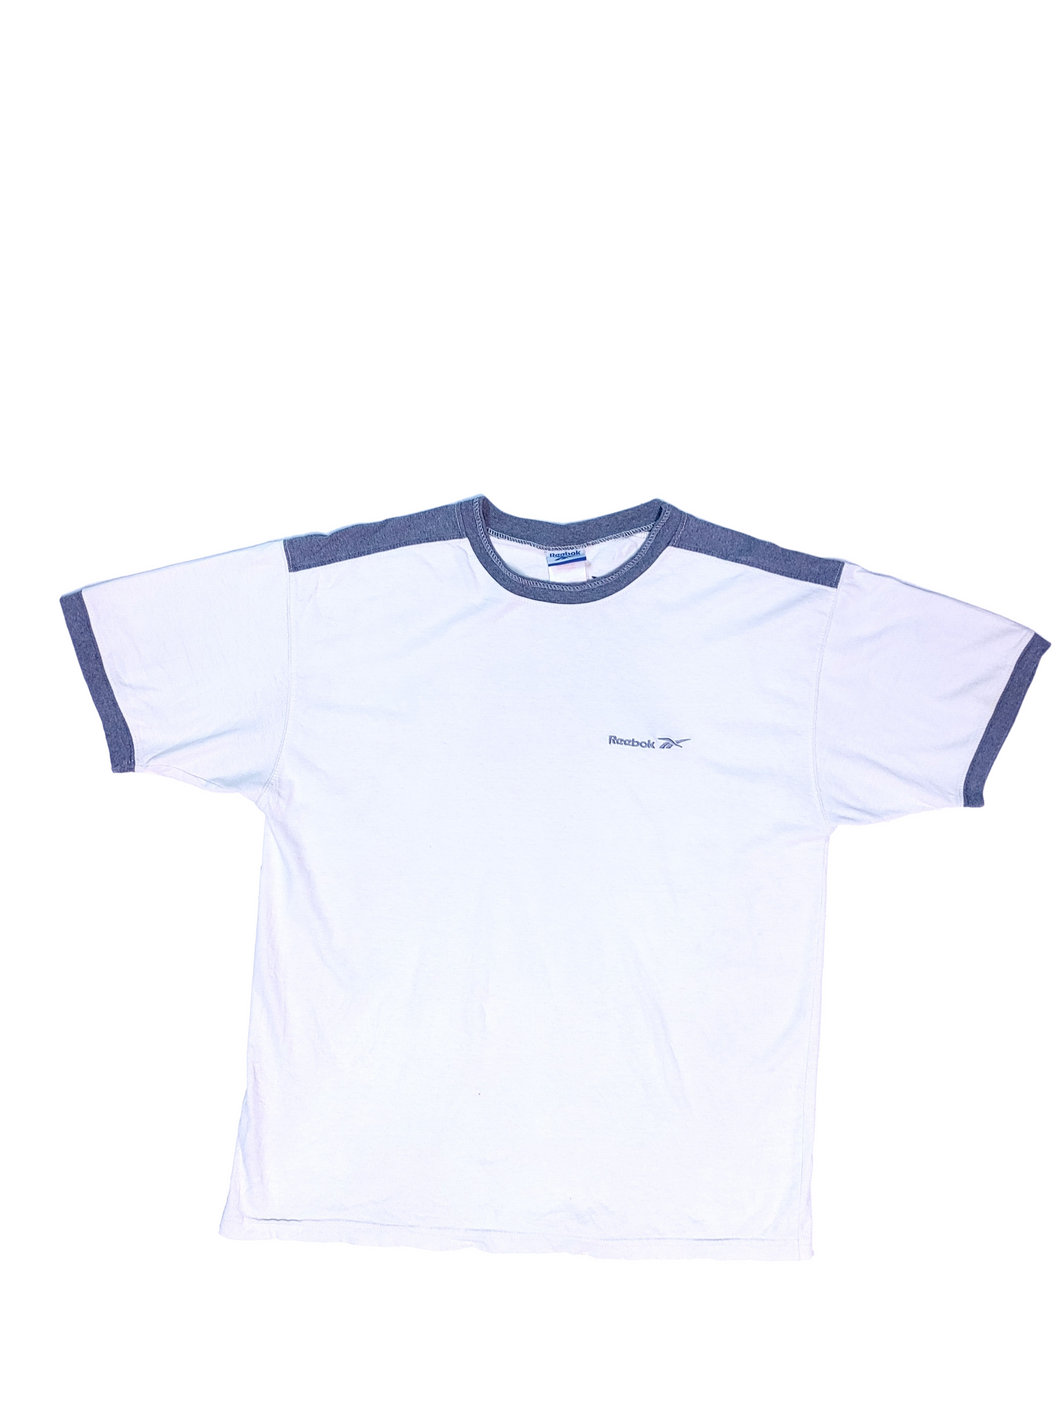 90s Reebok Logo T-Shirt - Size XXL